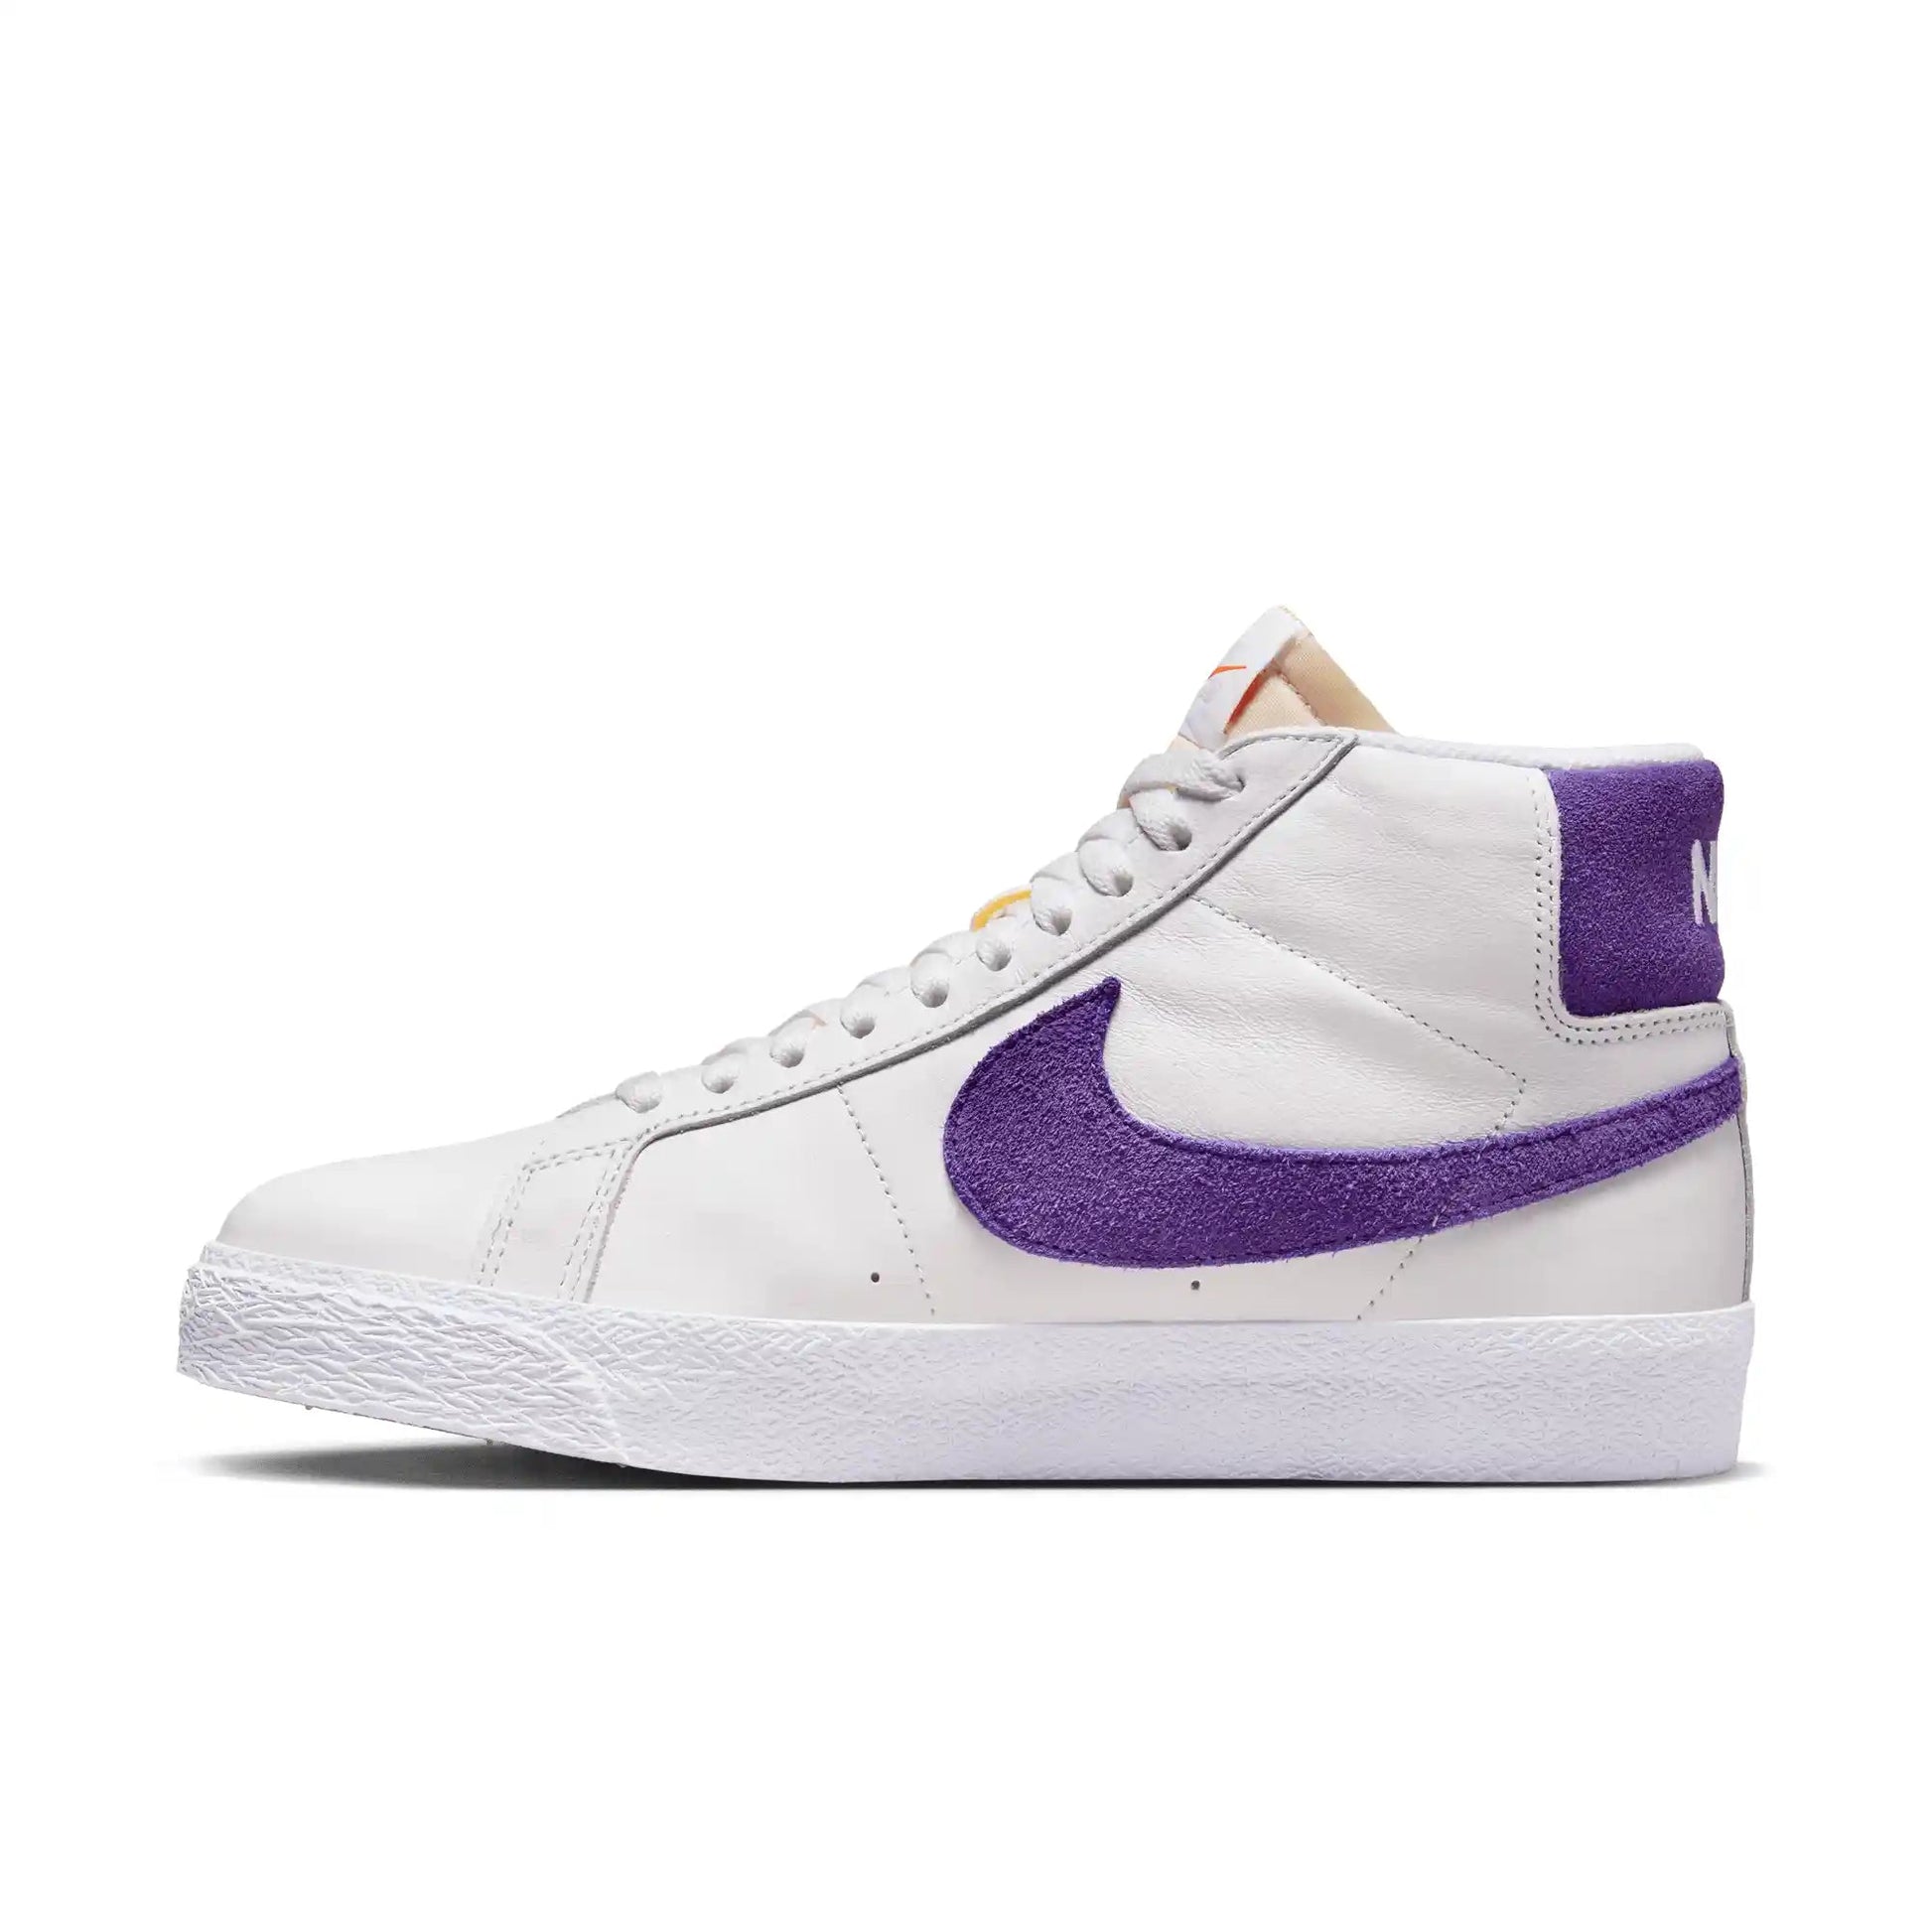 Nike SB Zoom Blazer Mid, white/court purple-white-gum light brown - Tiki Room Skateboards - 7